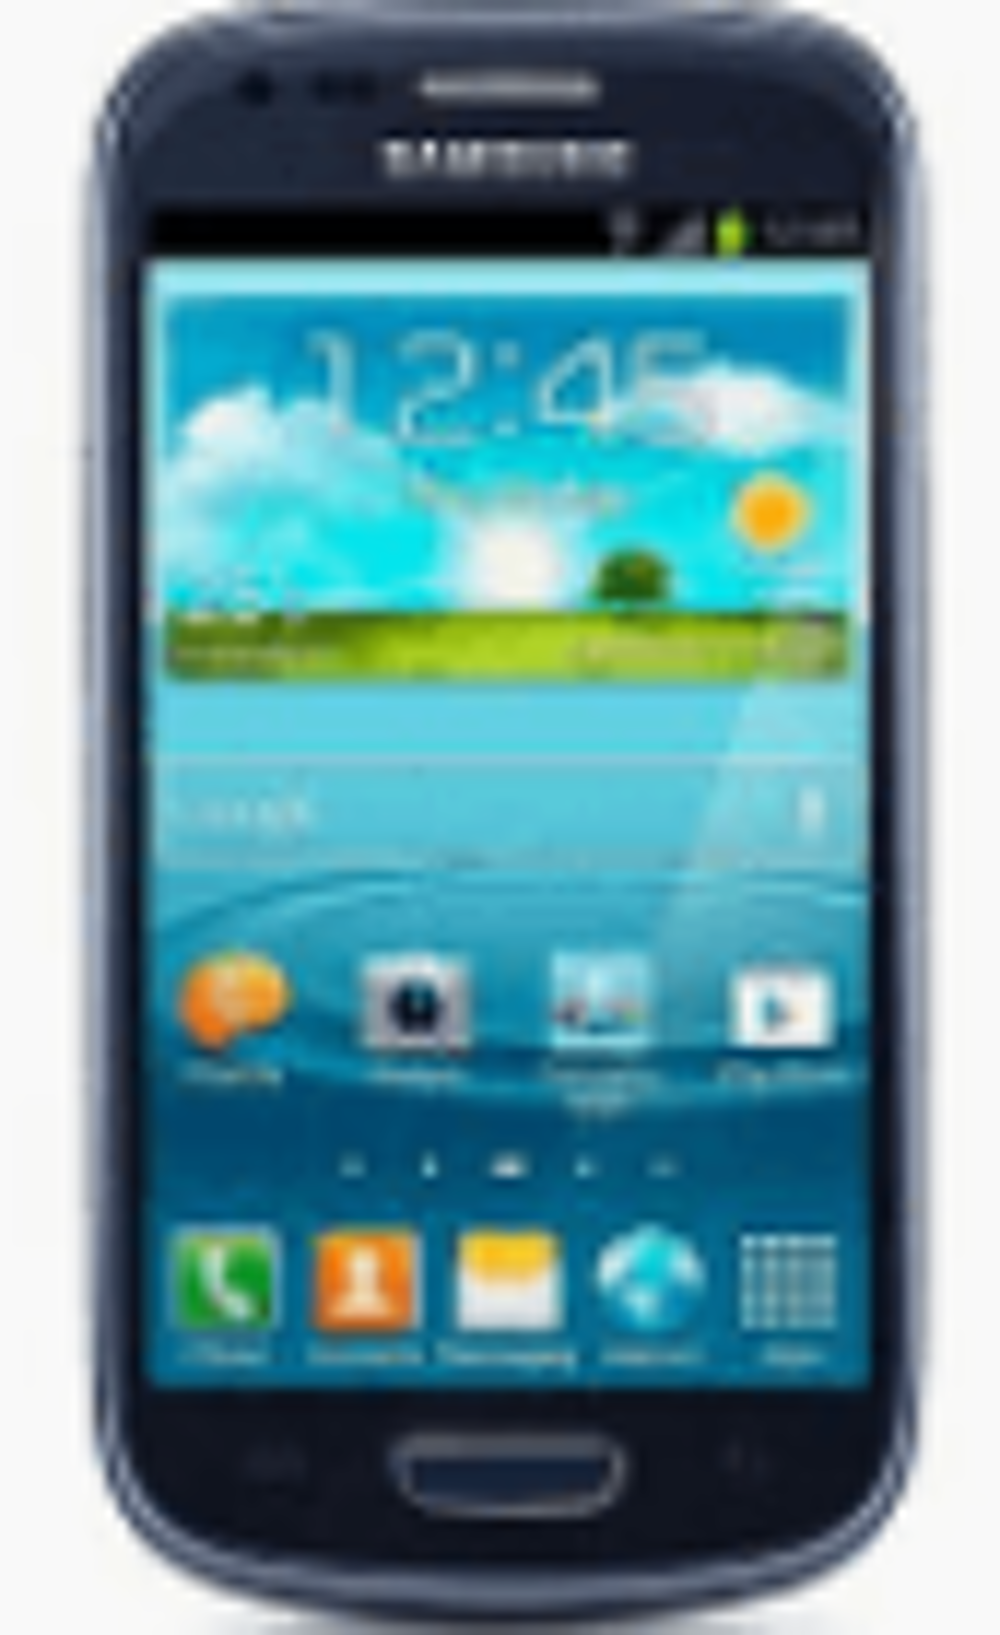 Mini Smartphone Samsung Galaxy S3 mini HT-I8190 noir
Tlphones et tablettes